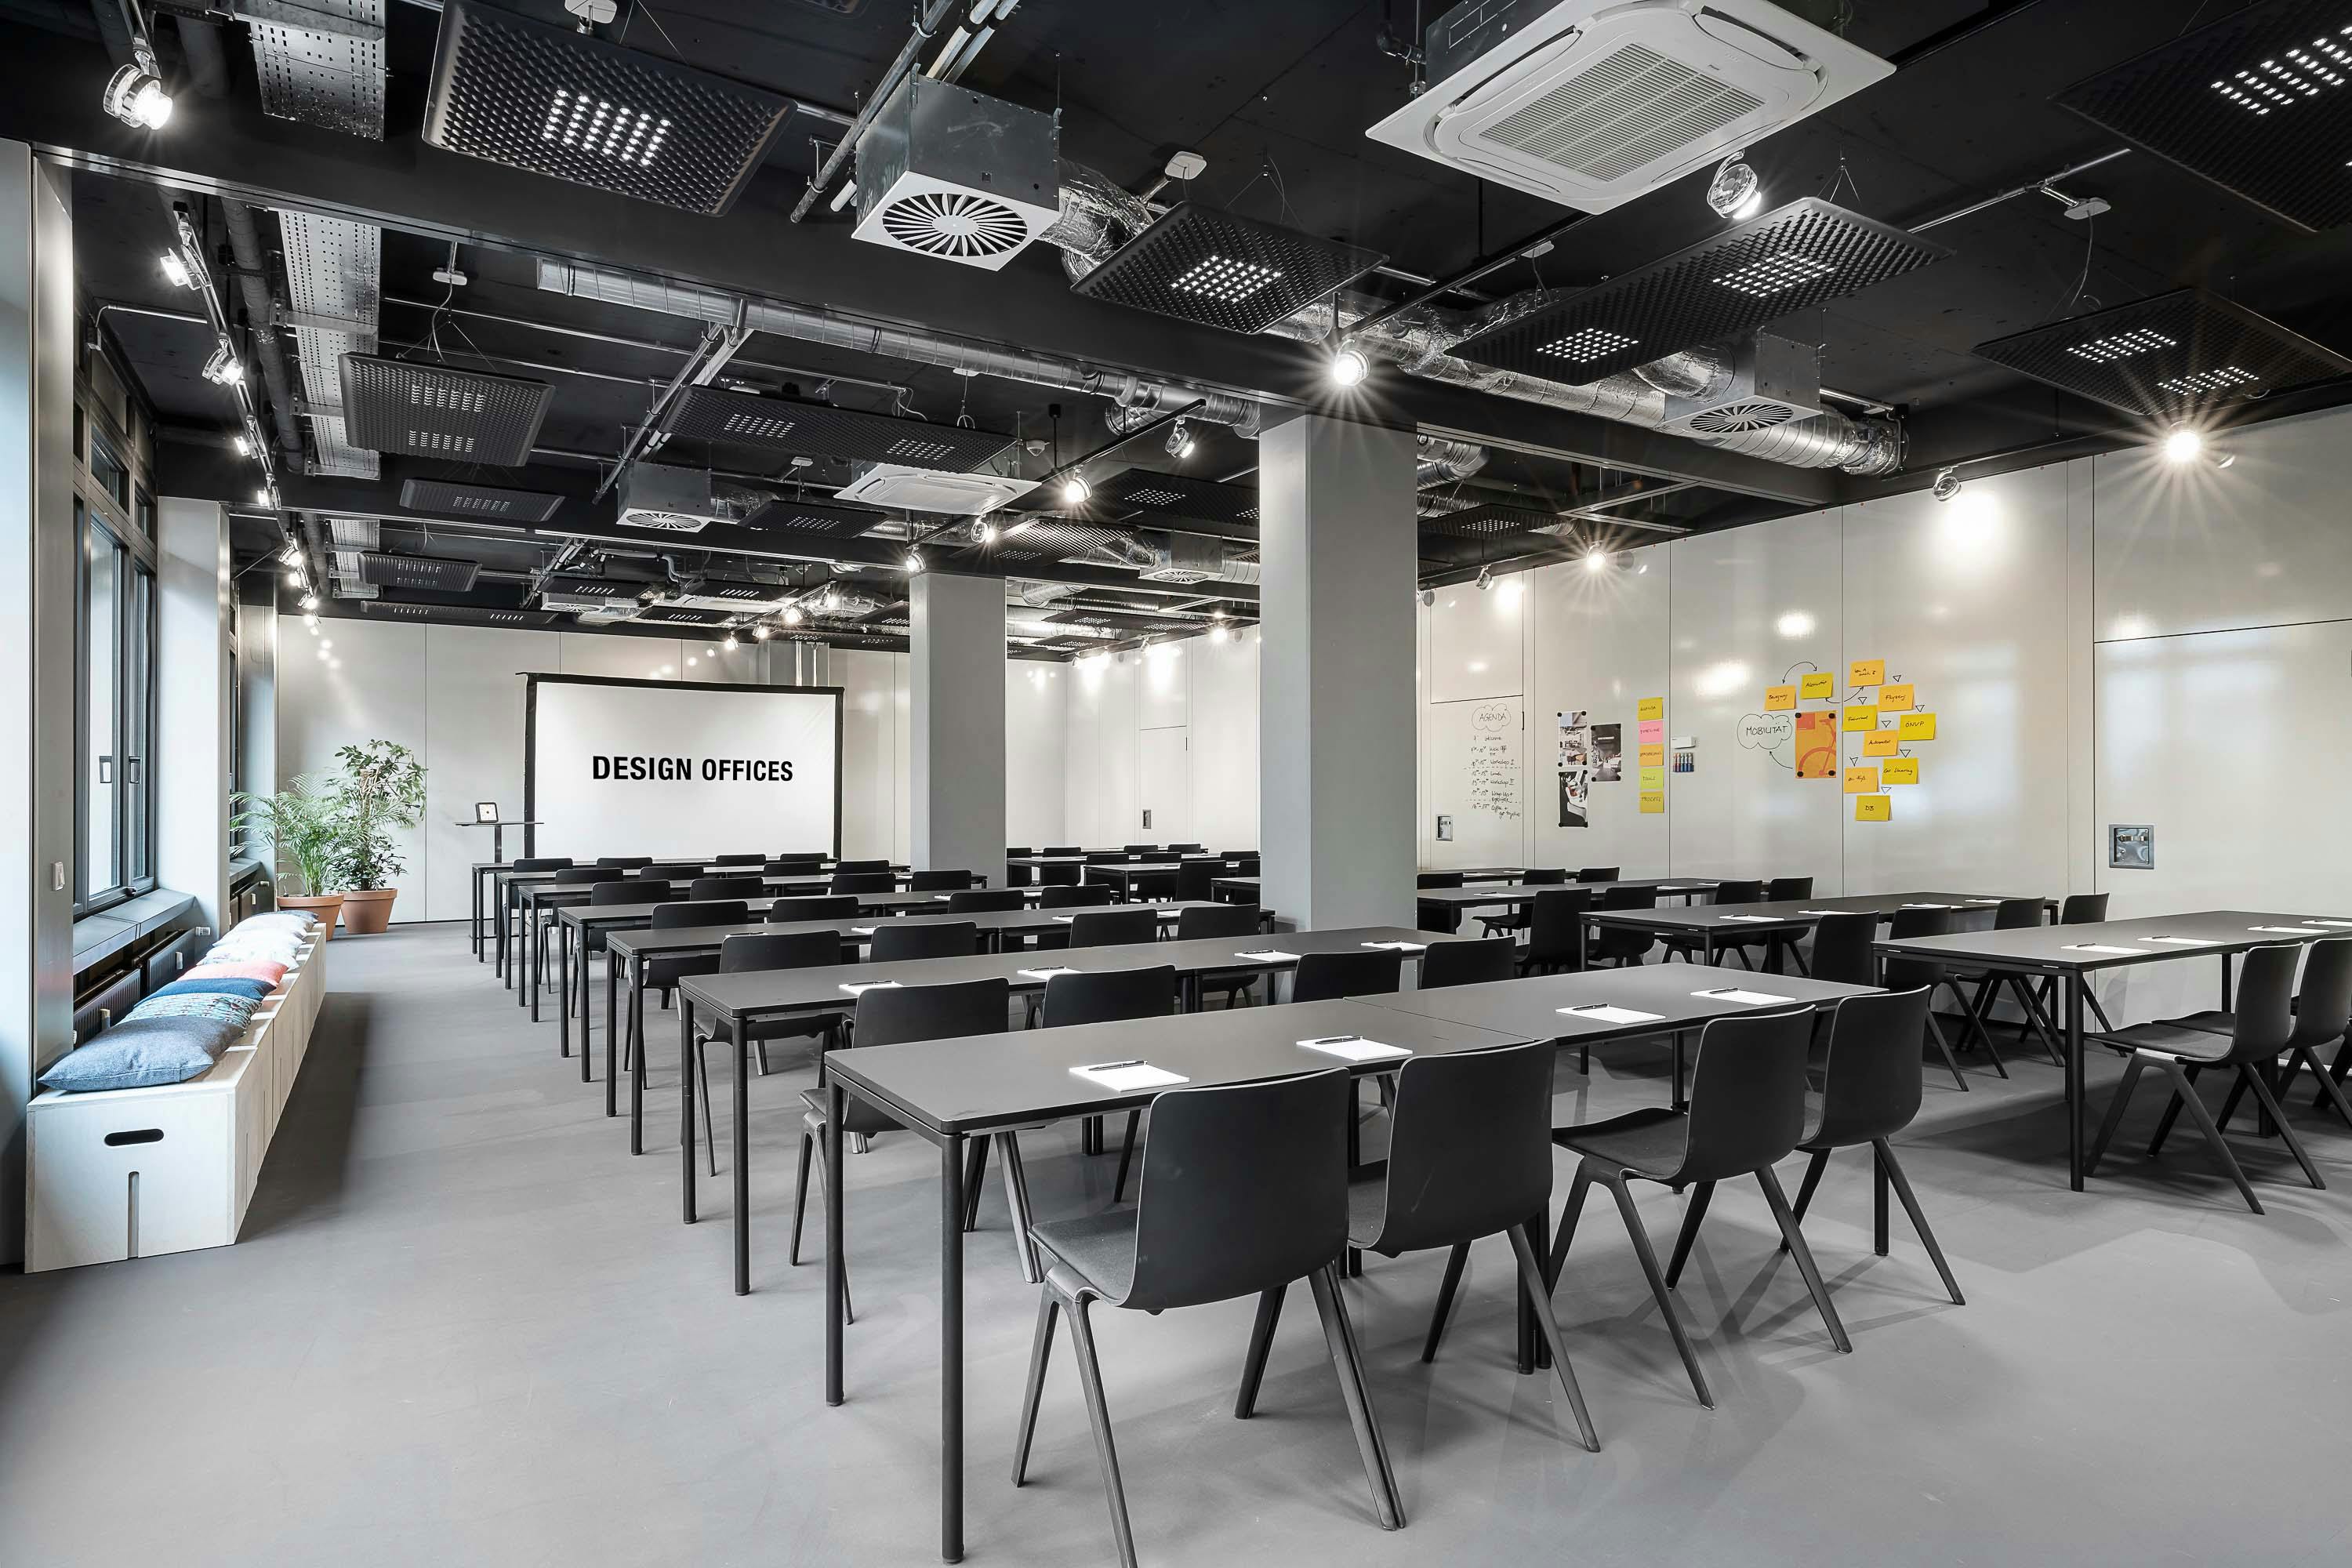 Design Offices Training Room